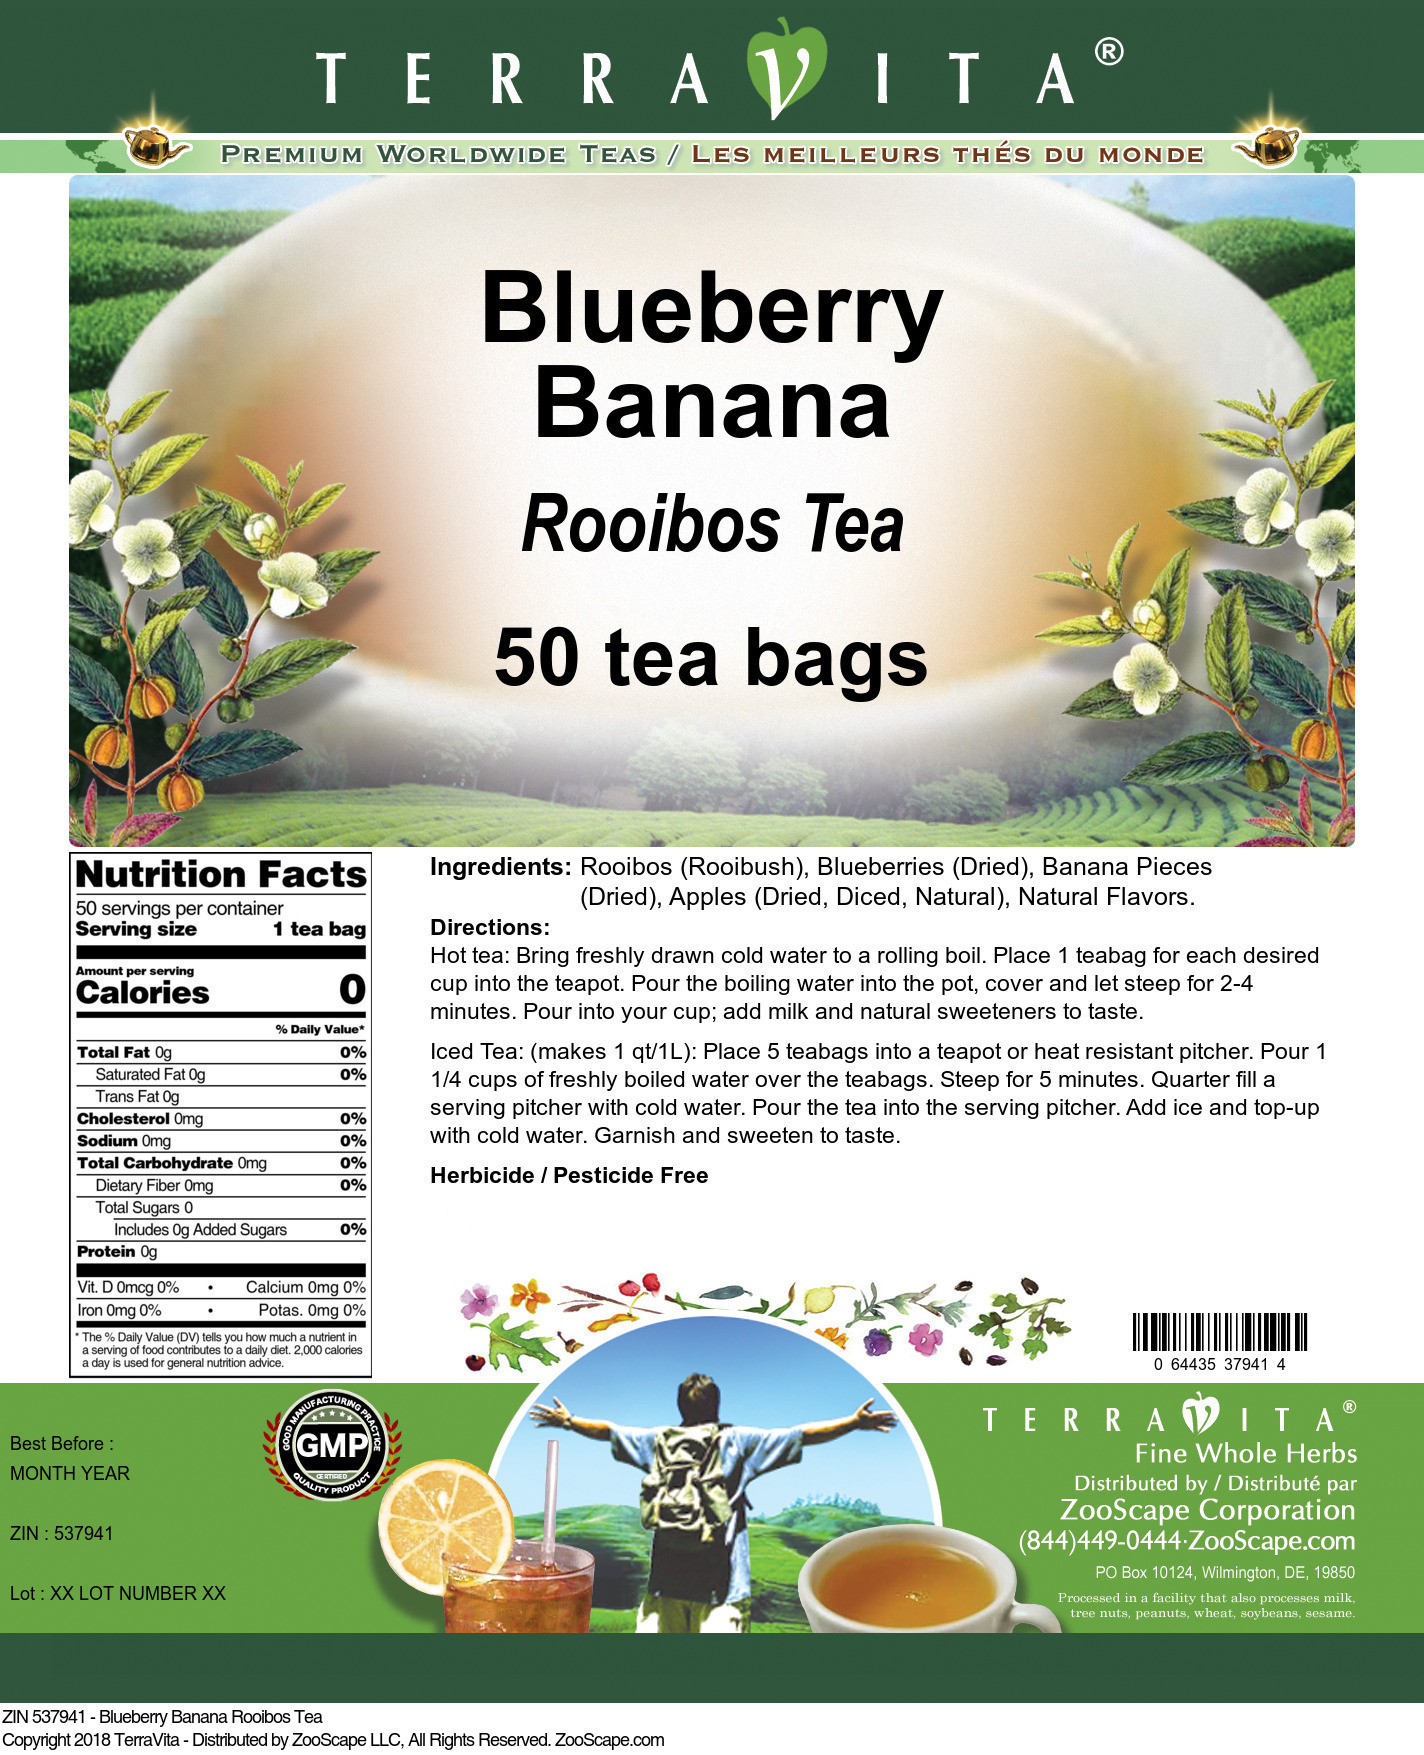 Blueberry Banana Rooibos Tea - Label